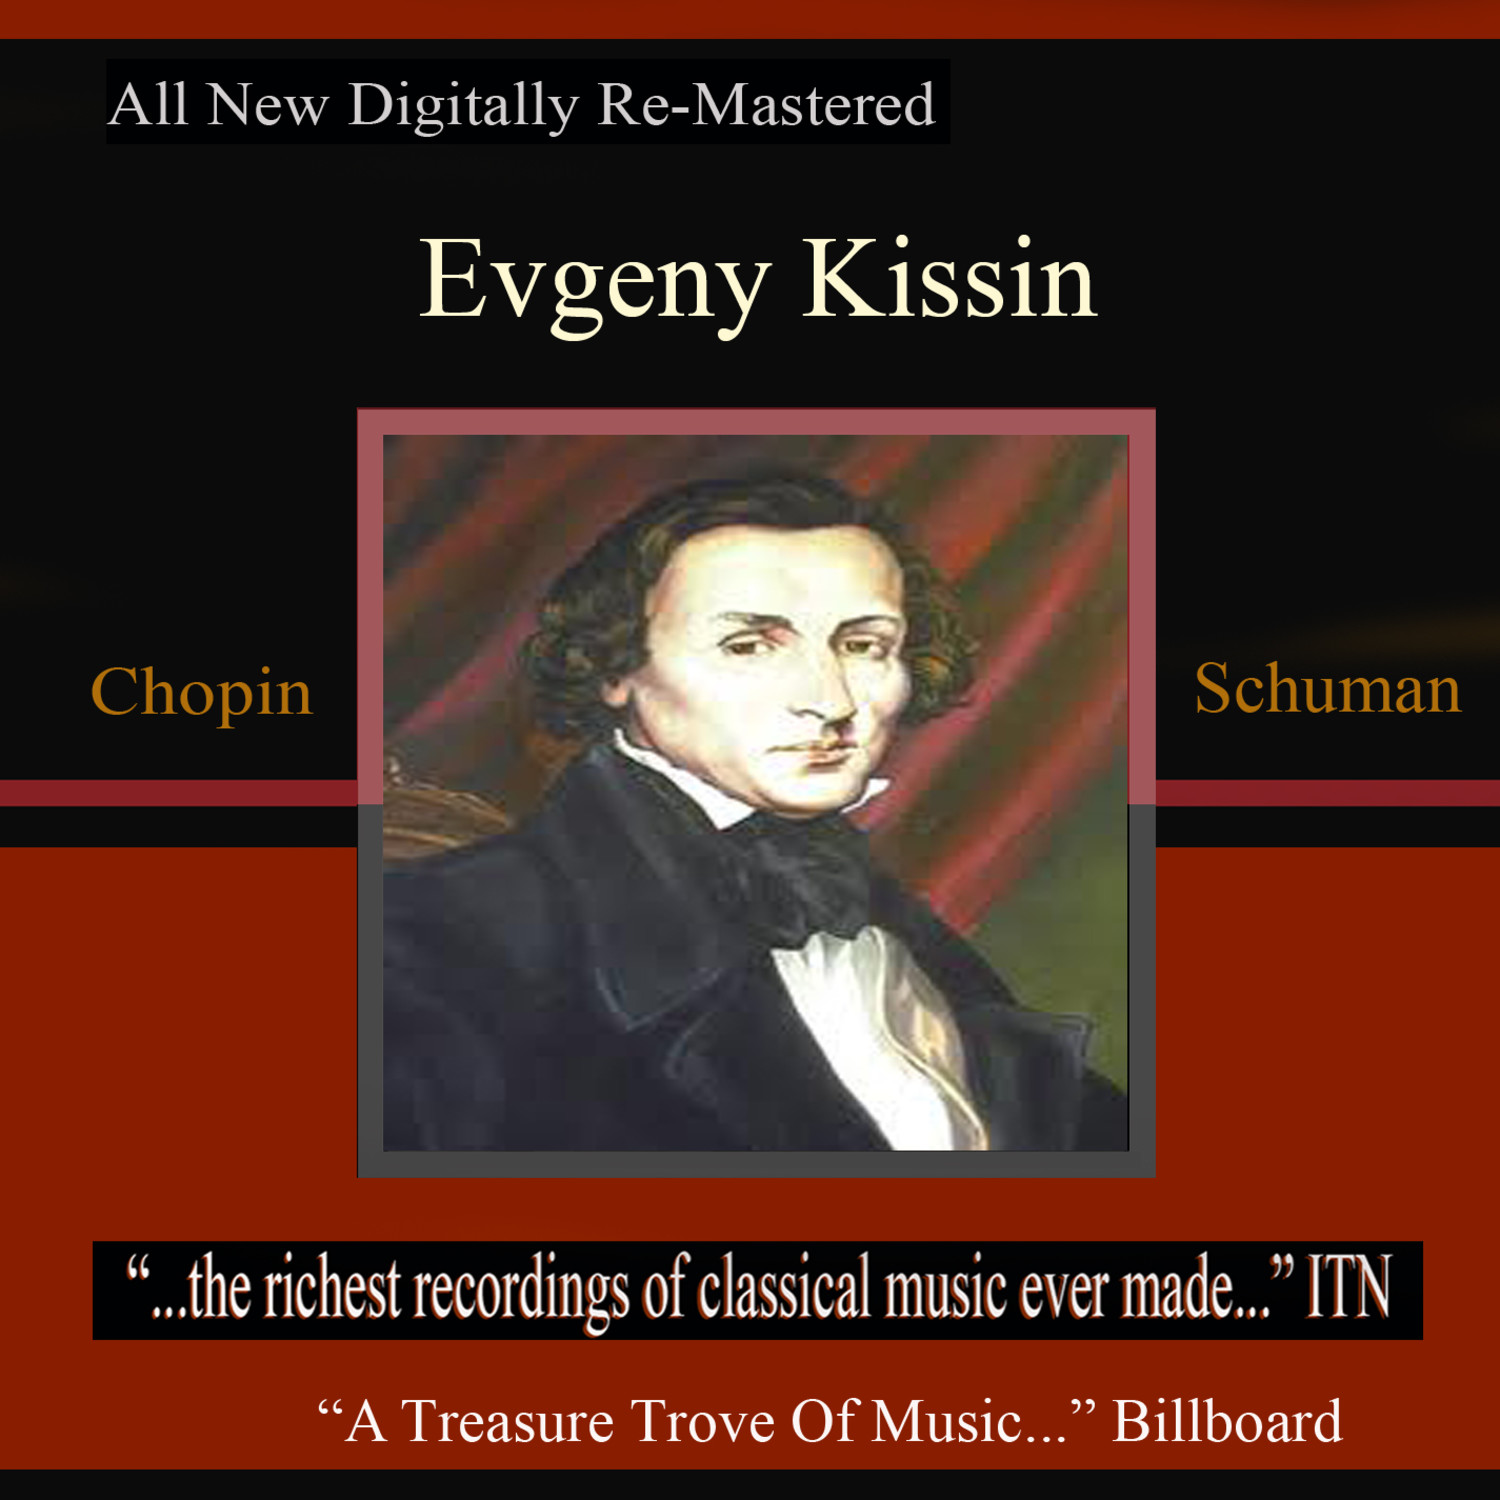 Kissin - Copin, Schumann